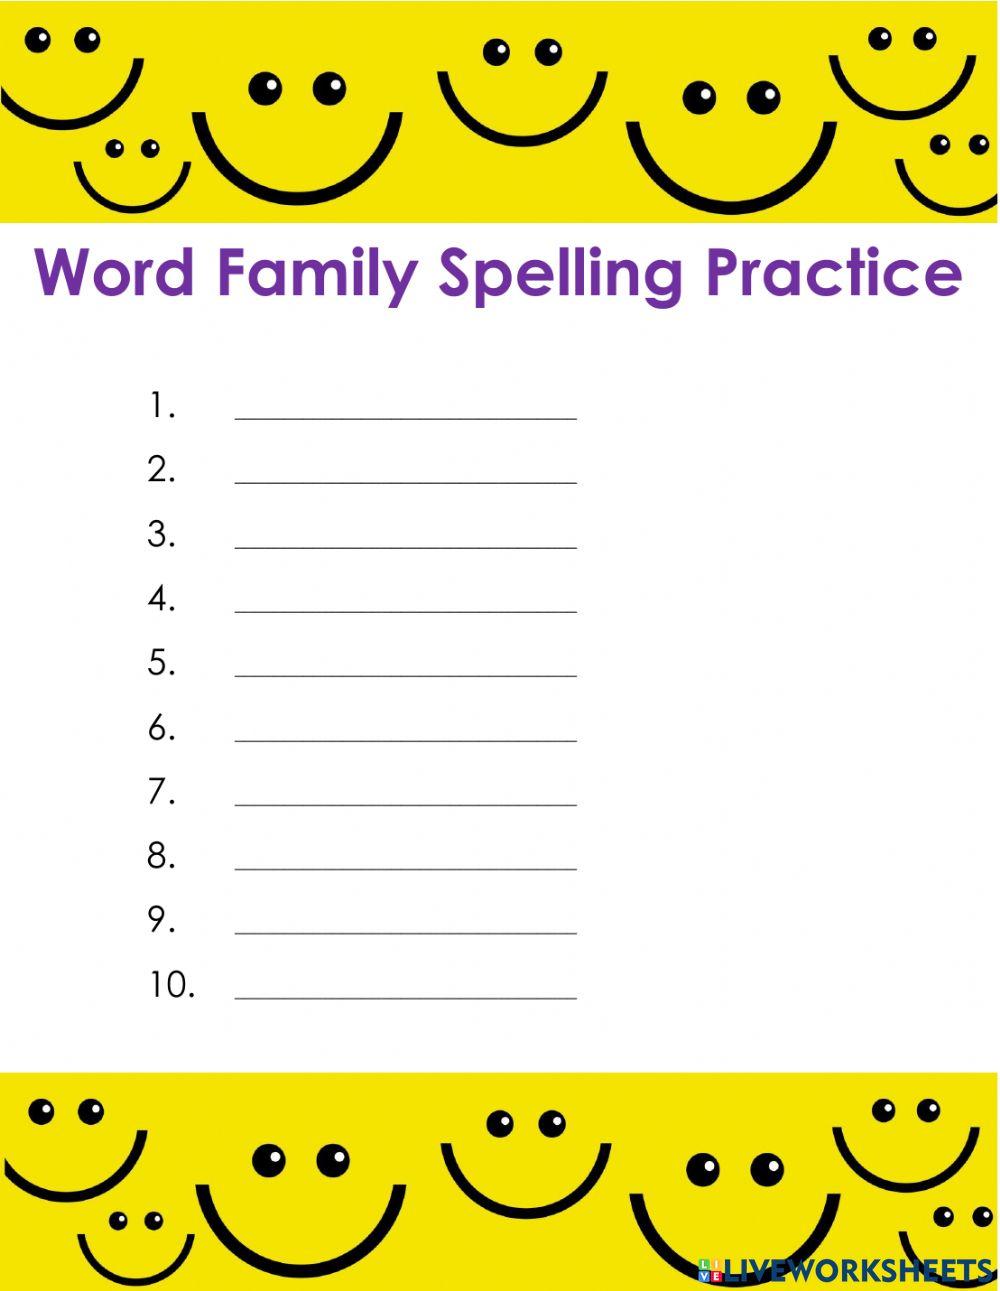 Word Family Spelling Practice